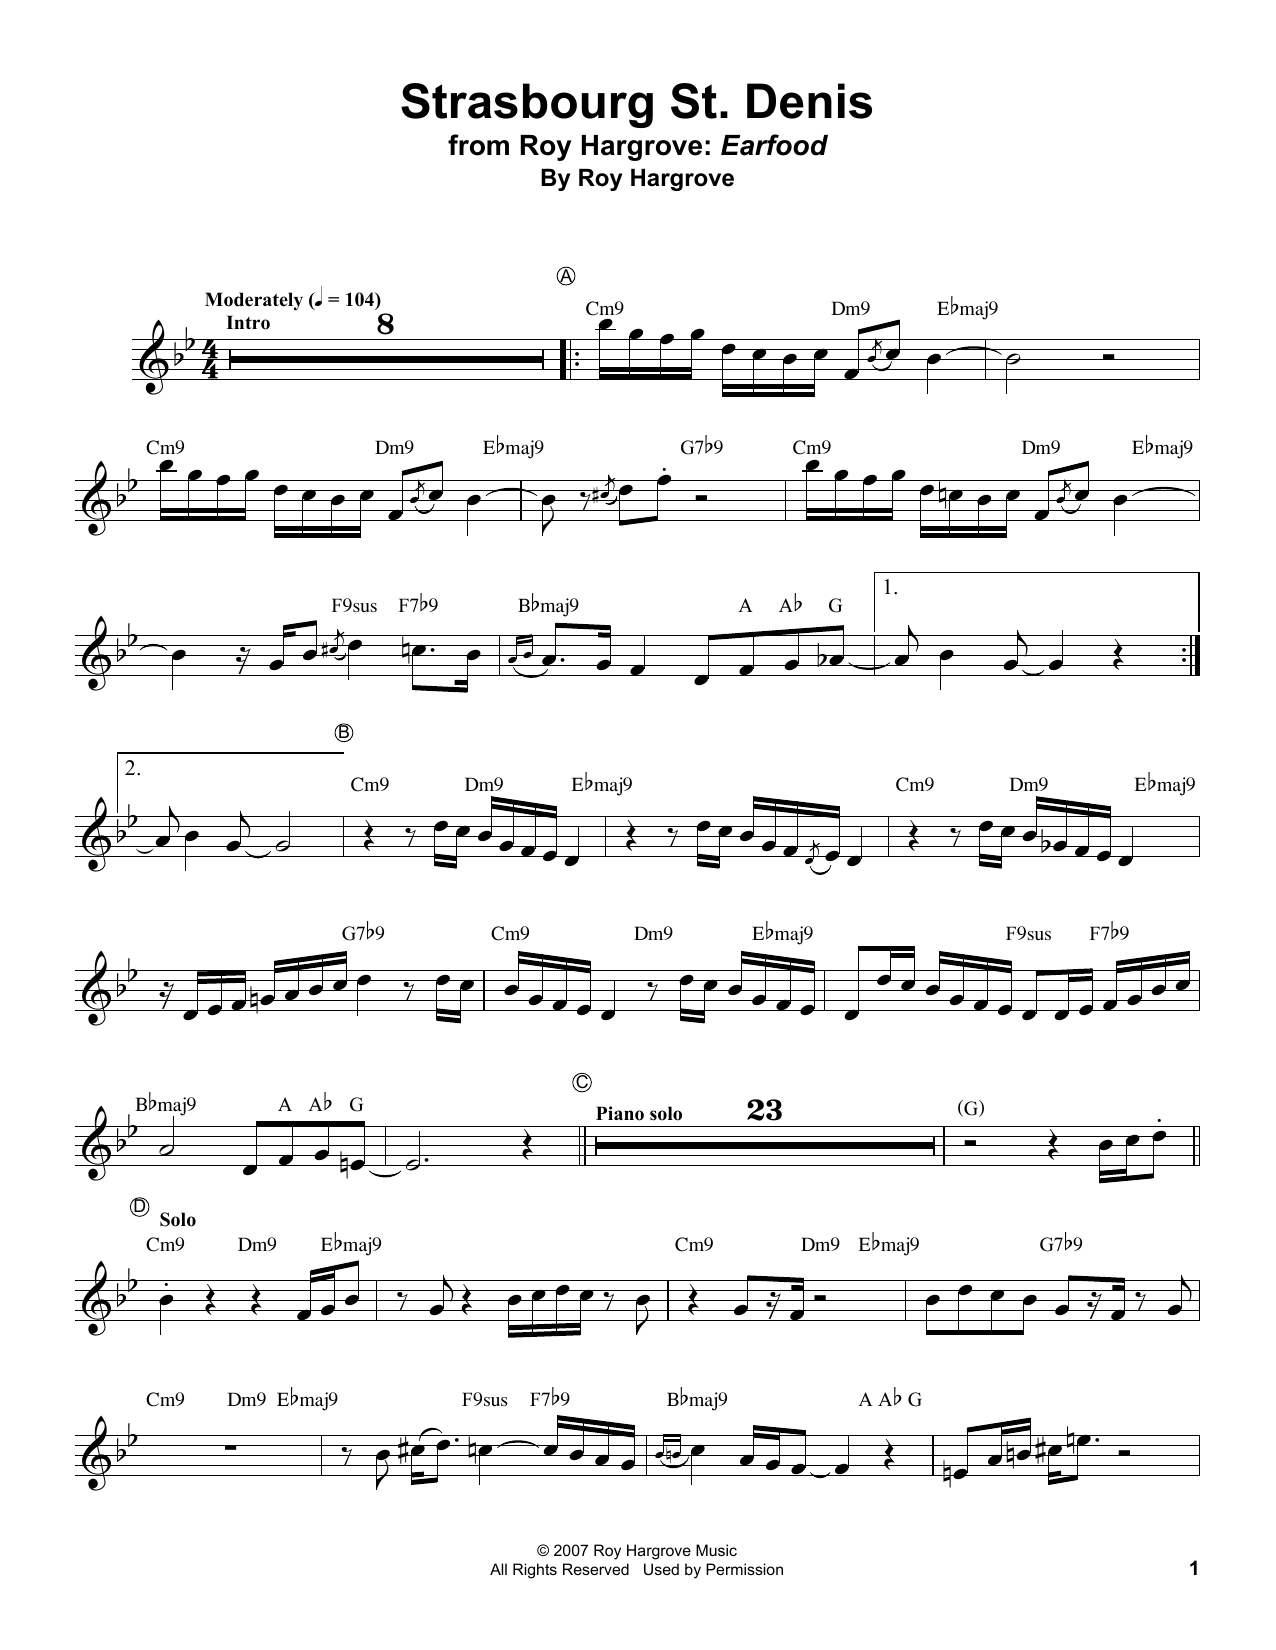 Roy Hargrove Strasbourg / St. Denis Sheet Music Notes & Chords for Trumpet Transcription - Download or Print PDF